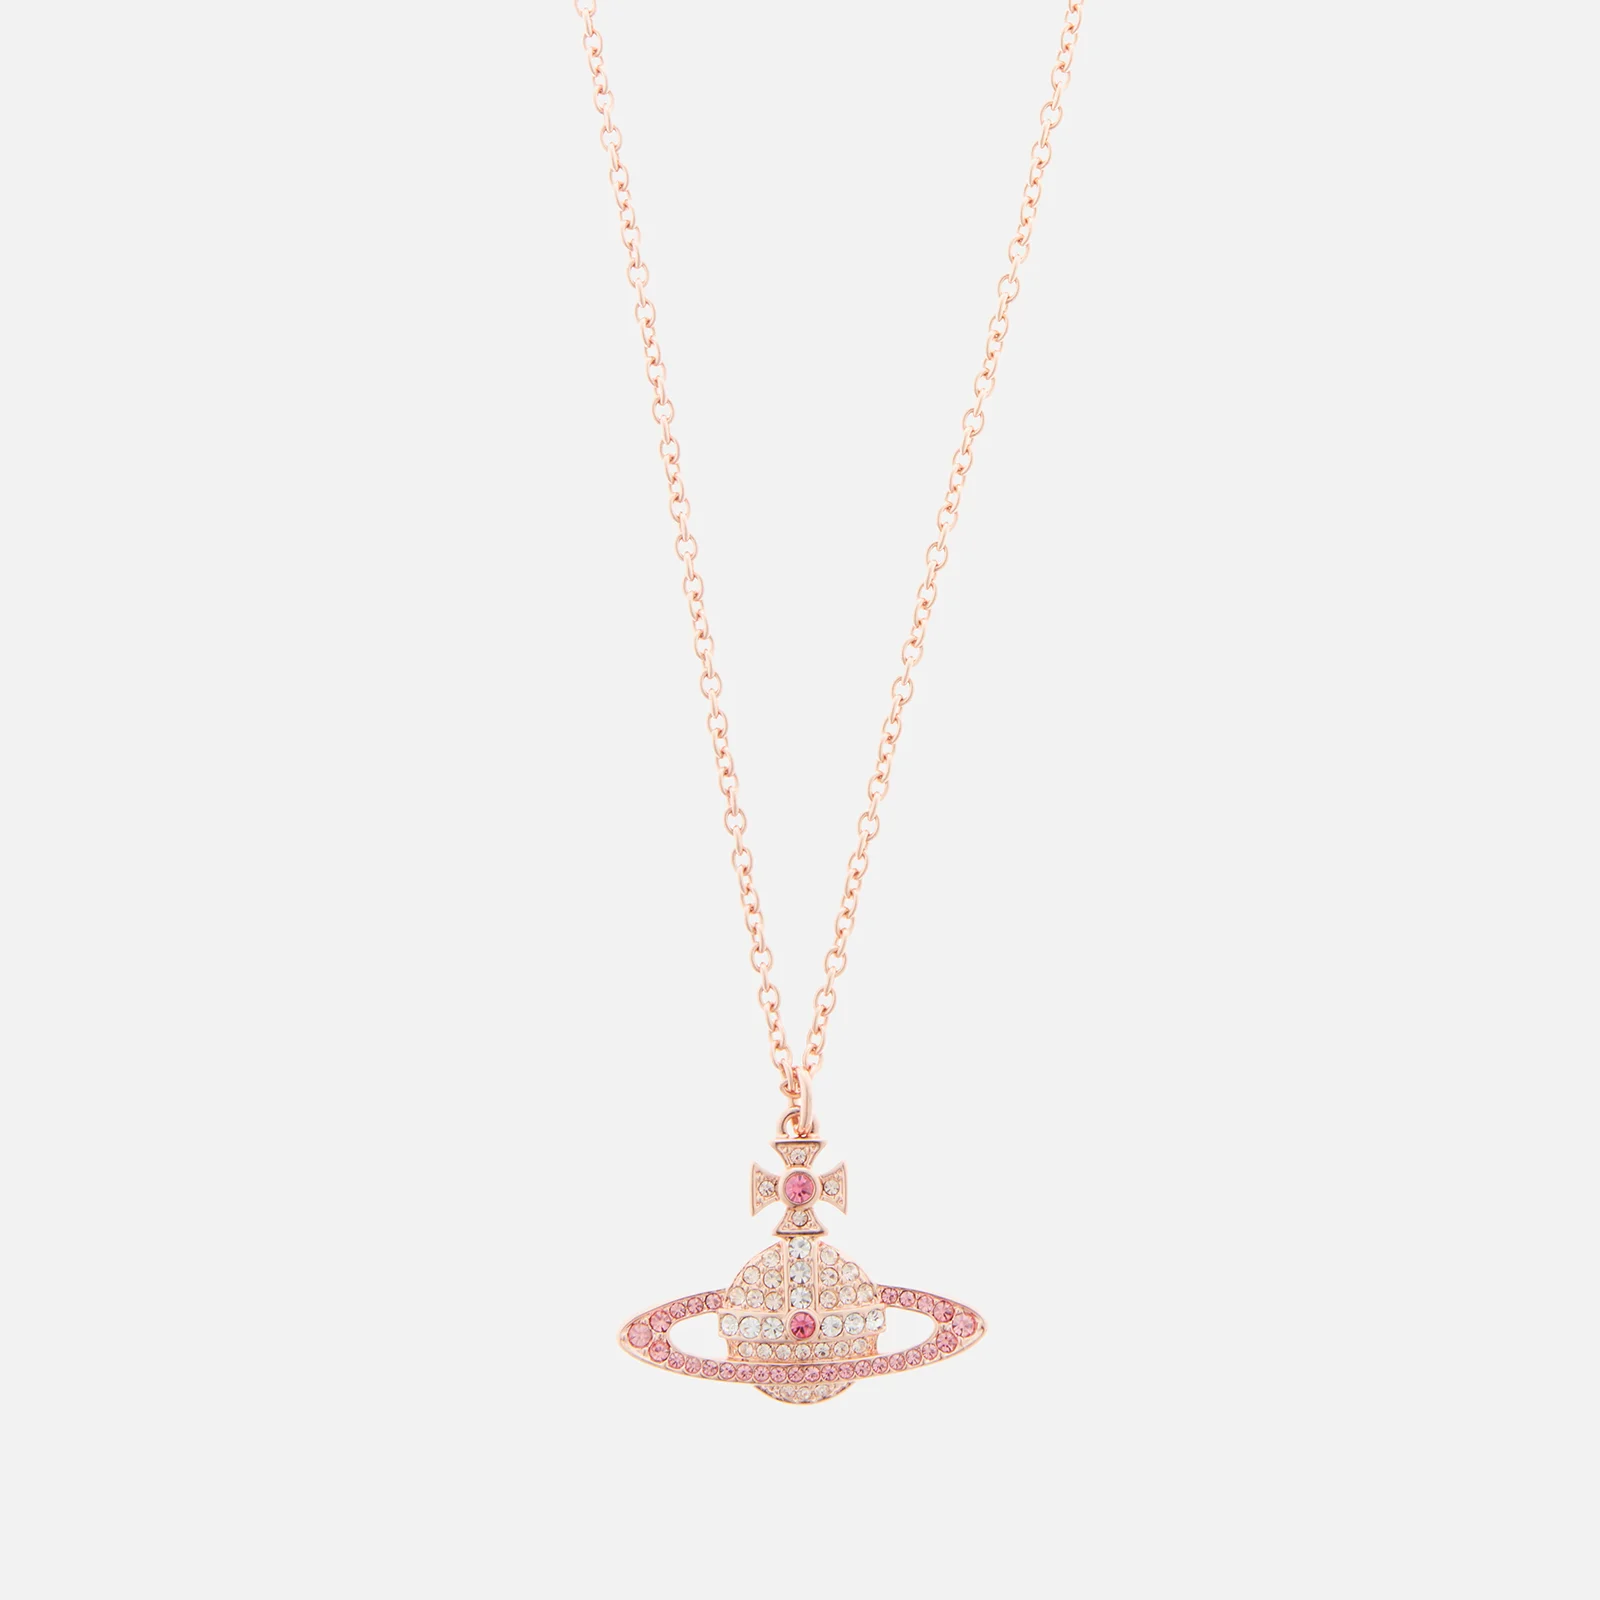 Vivienne Westwood Kika Rose Gold-Tone and Crystal Necklace Image 1